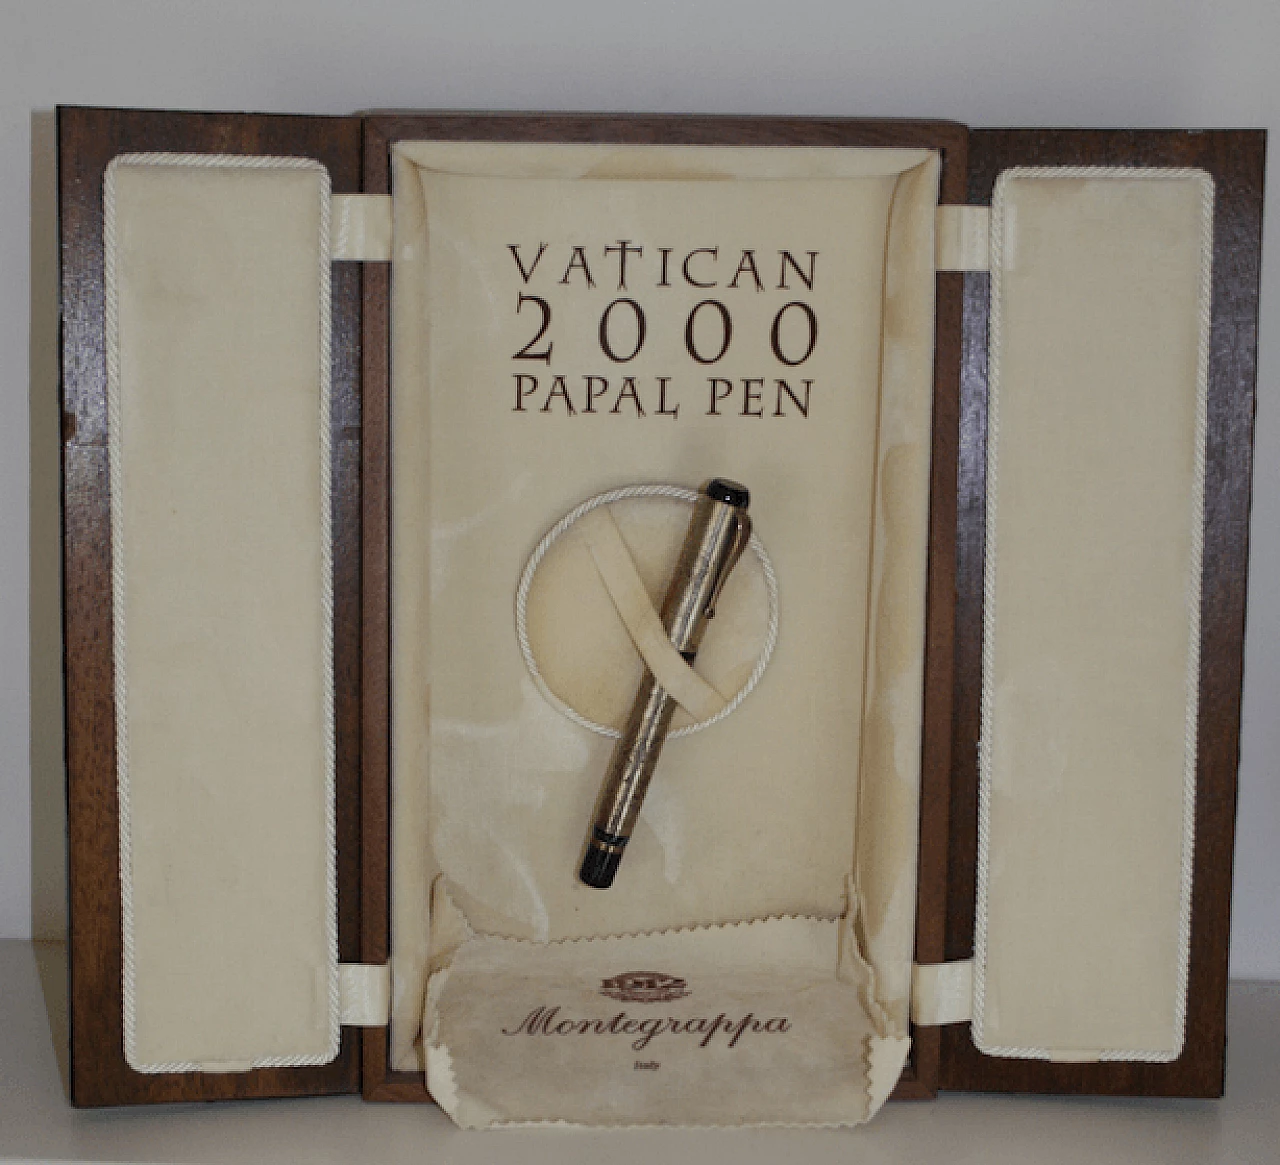 Penna Stilografica Montegrappa Vatican 2000 Papal Pen 1067254